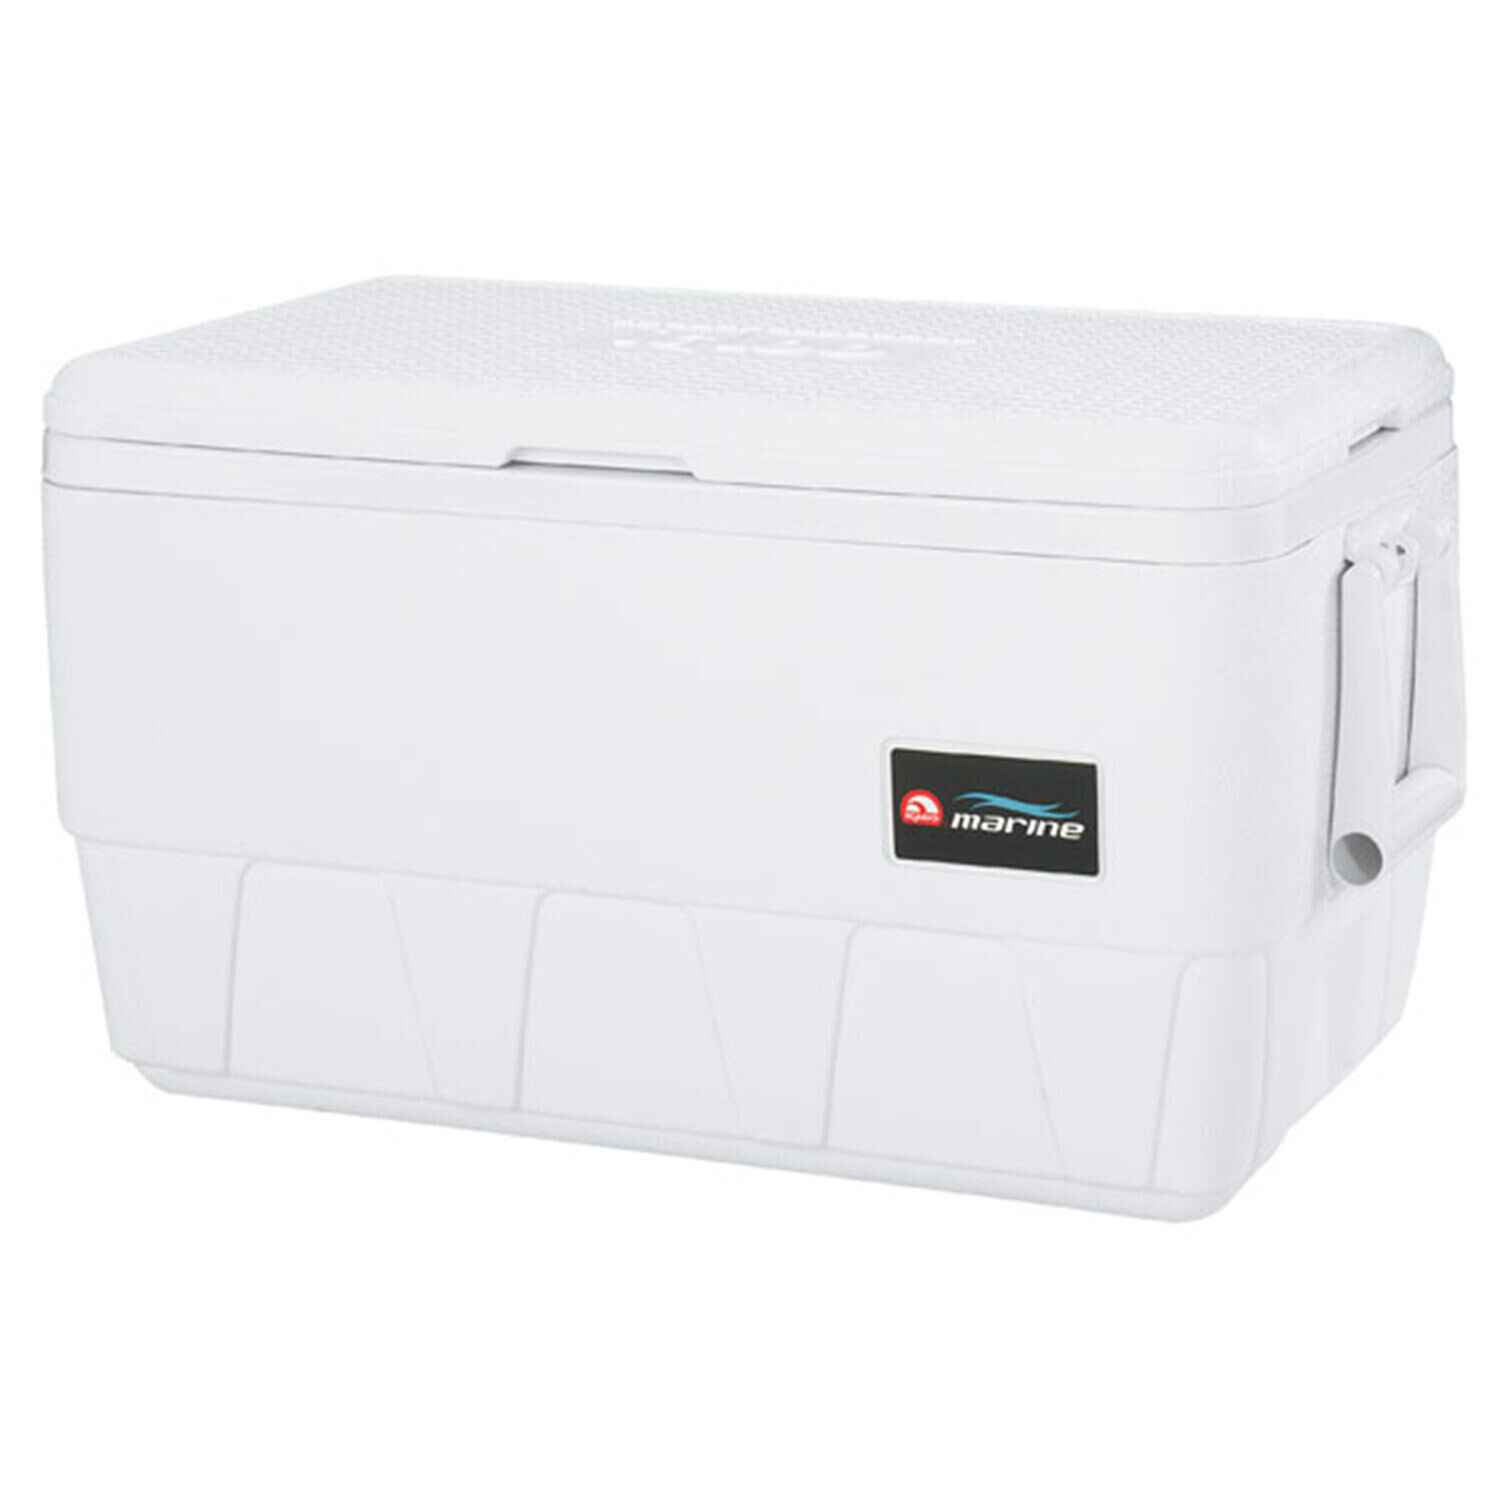 Igloo Marine Contour Cooler 25 Quart 23 L White for sale online 